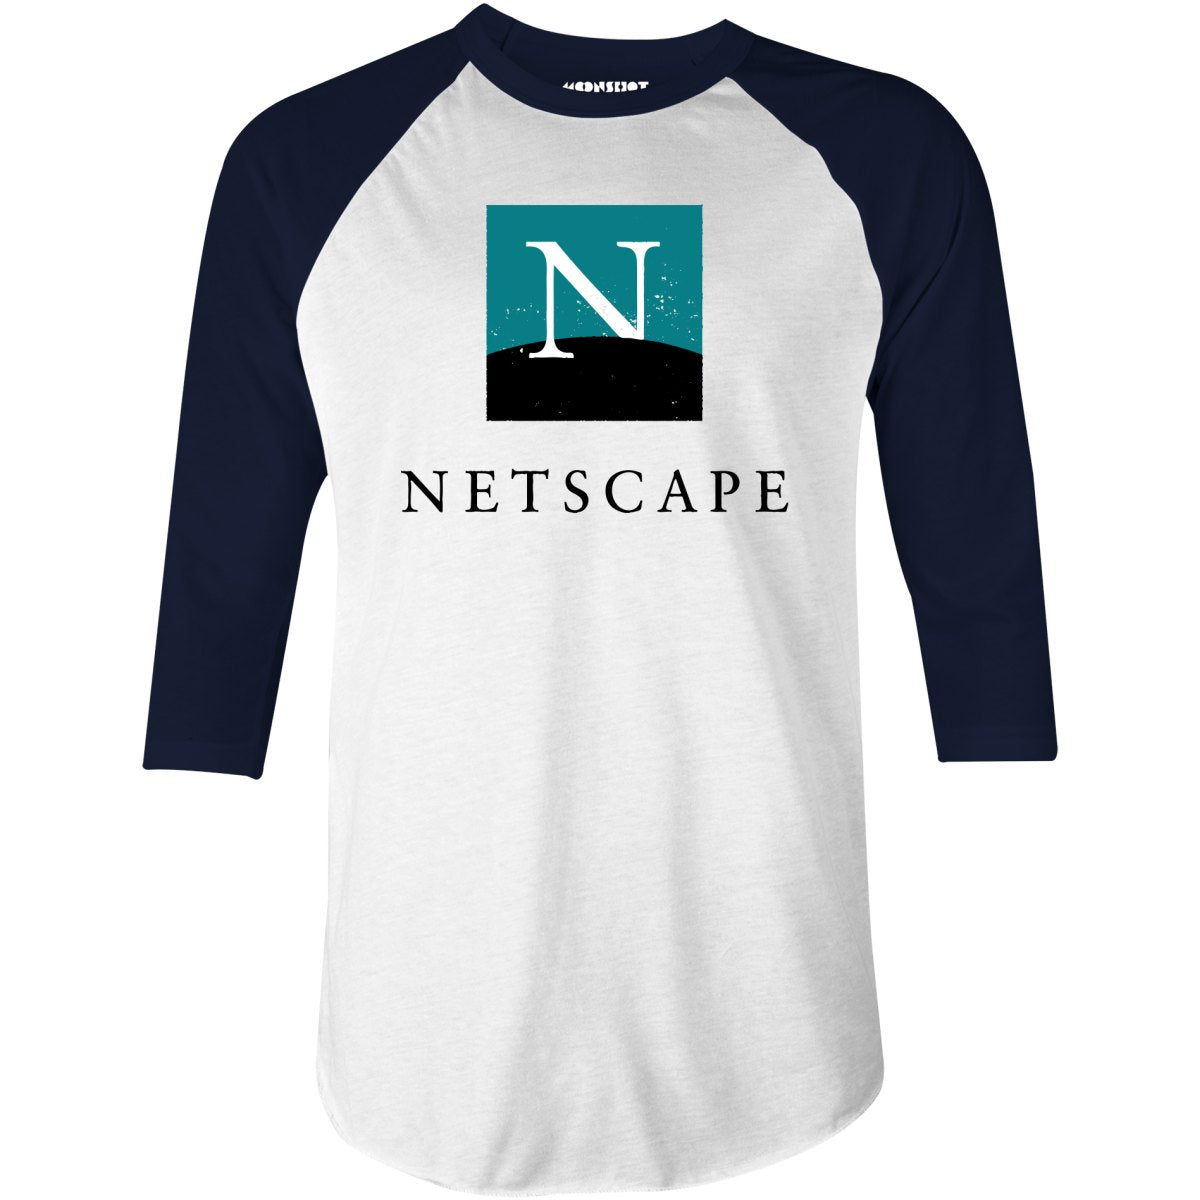 Netscape - Vintage Internet - 3/4 Sleeve Raglan T-Shirt